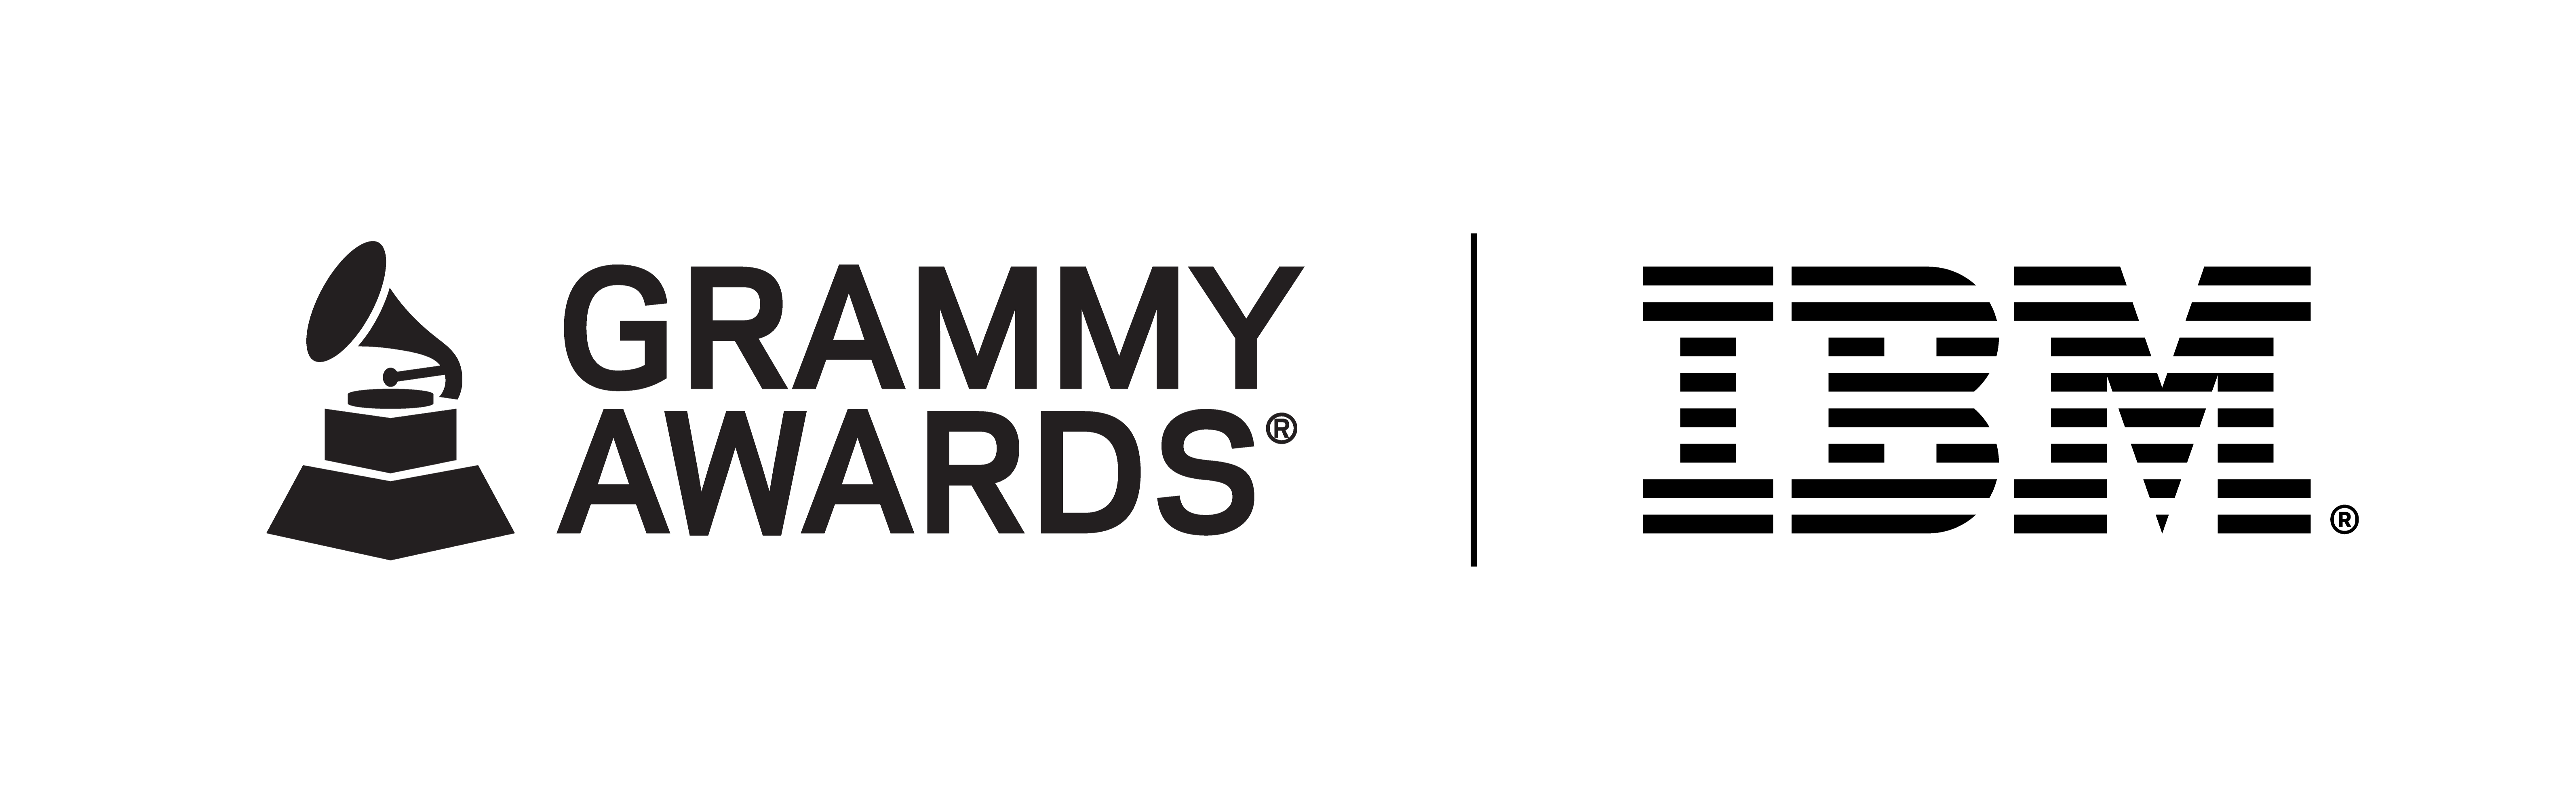 IBM-GRAMMY Awards Logo-Lockup mit Grammophon